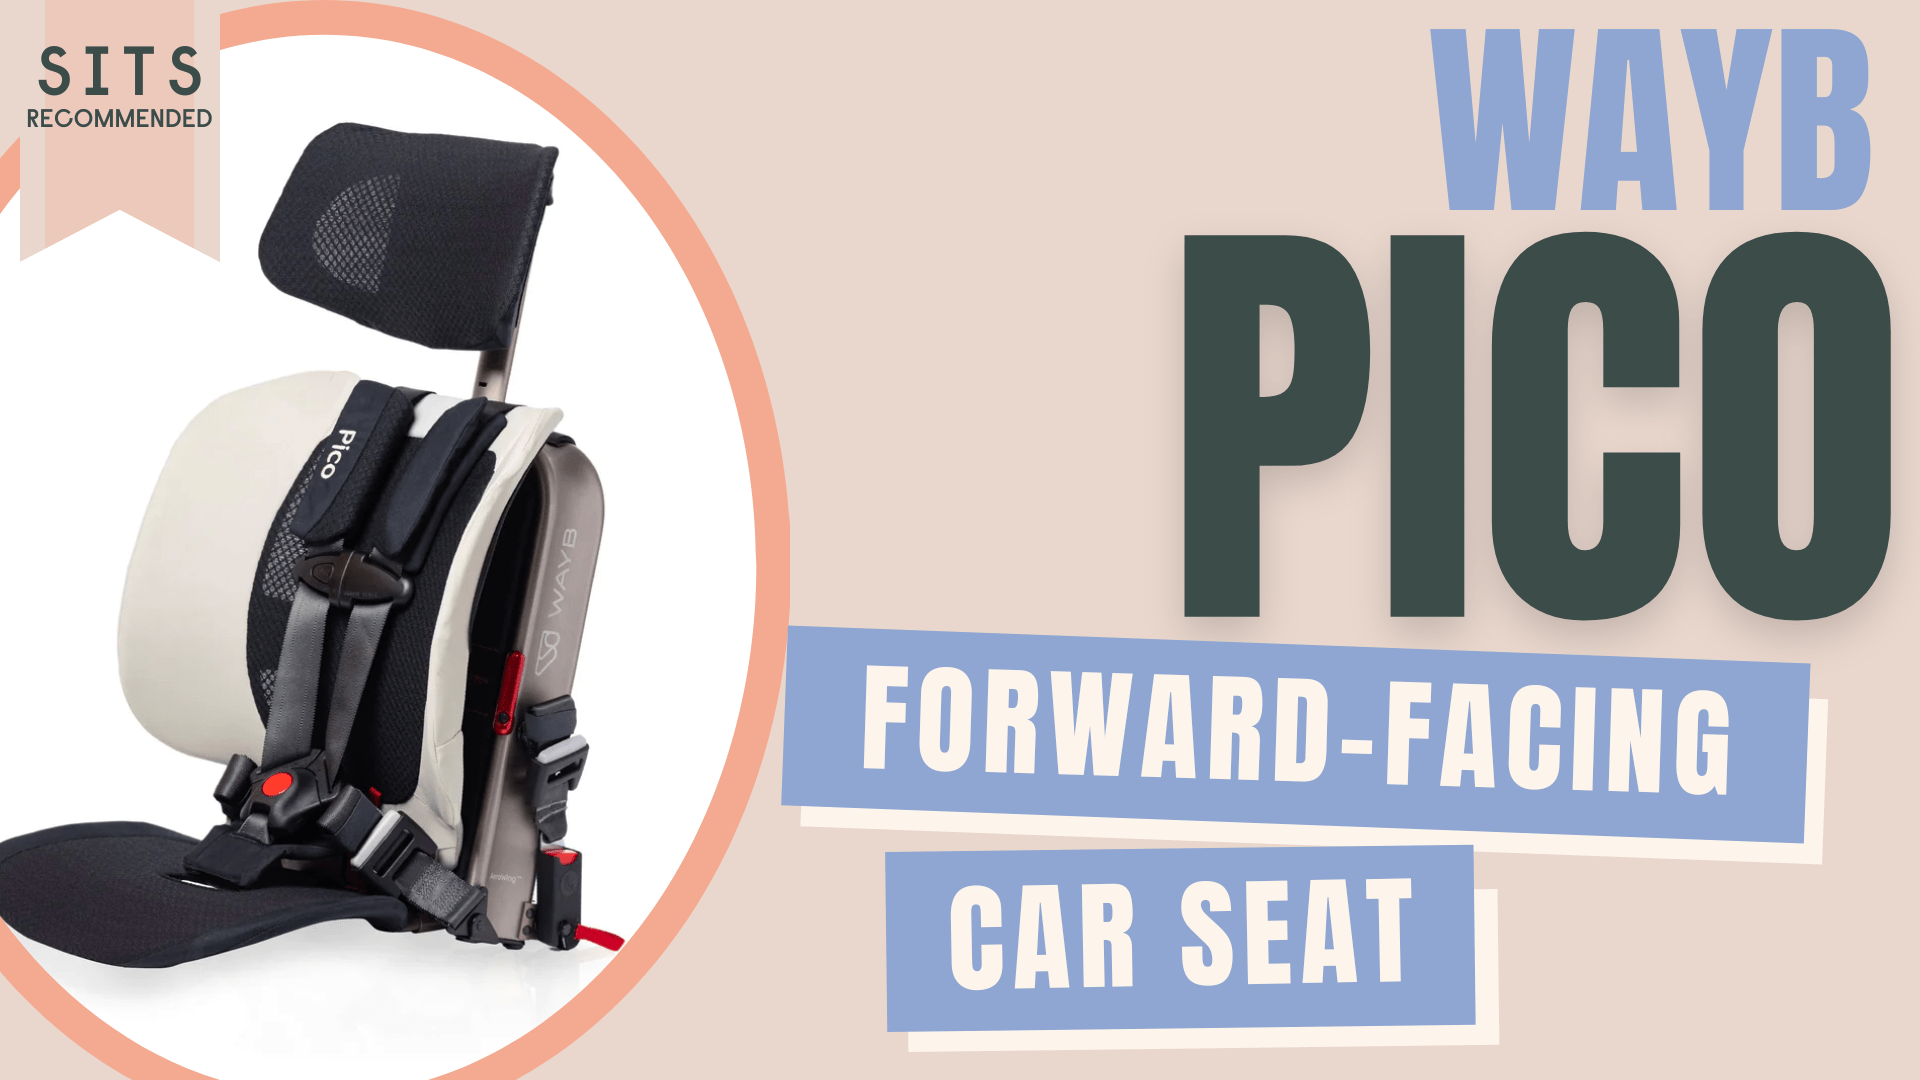 Wayb Pico Car Seat Review (USA/Canada)